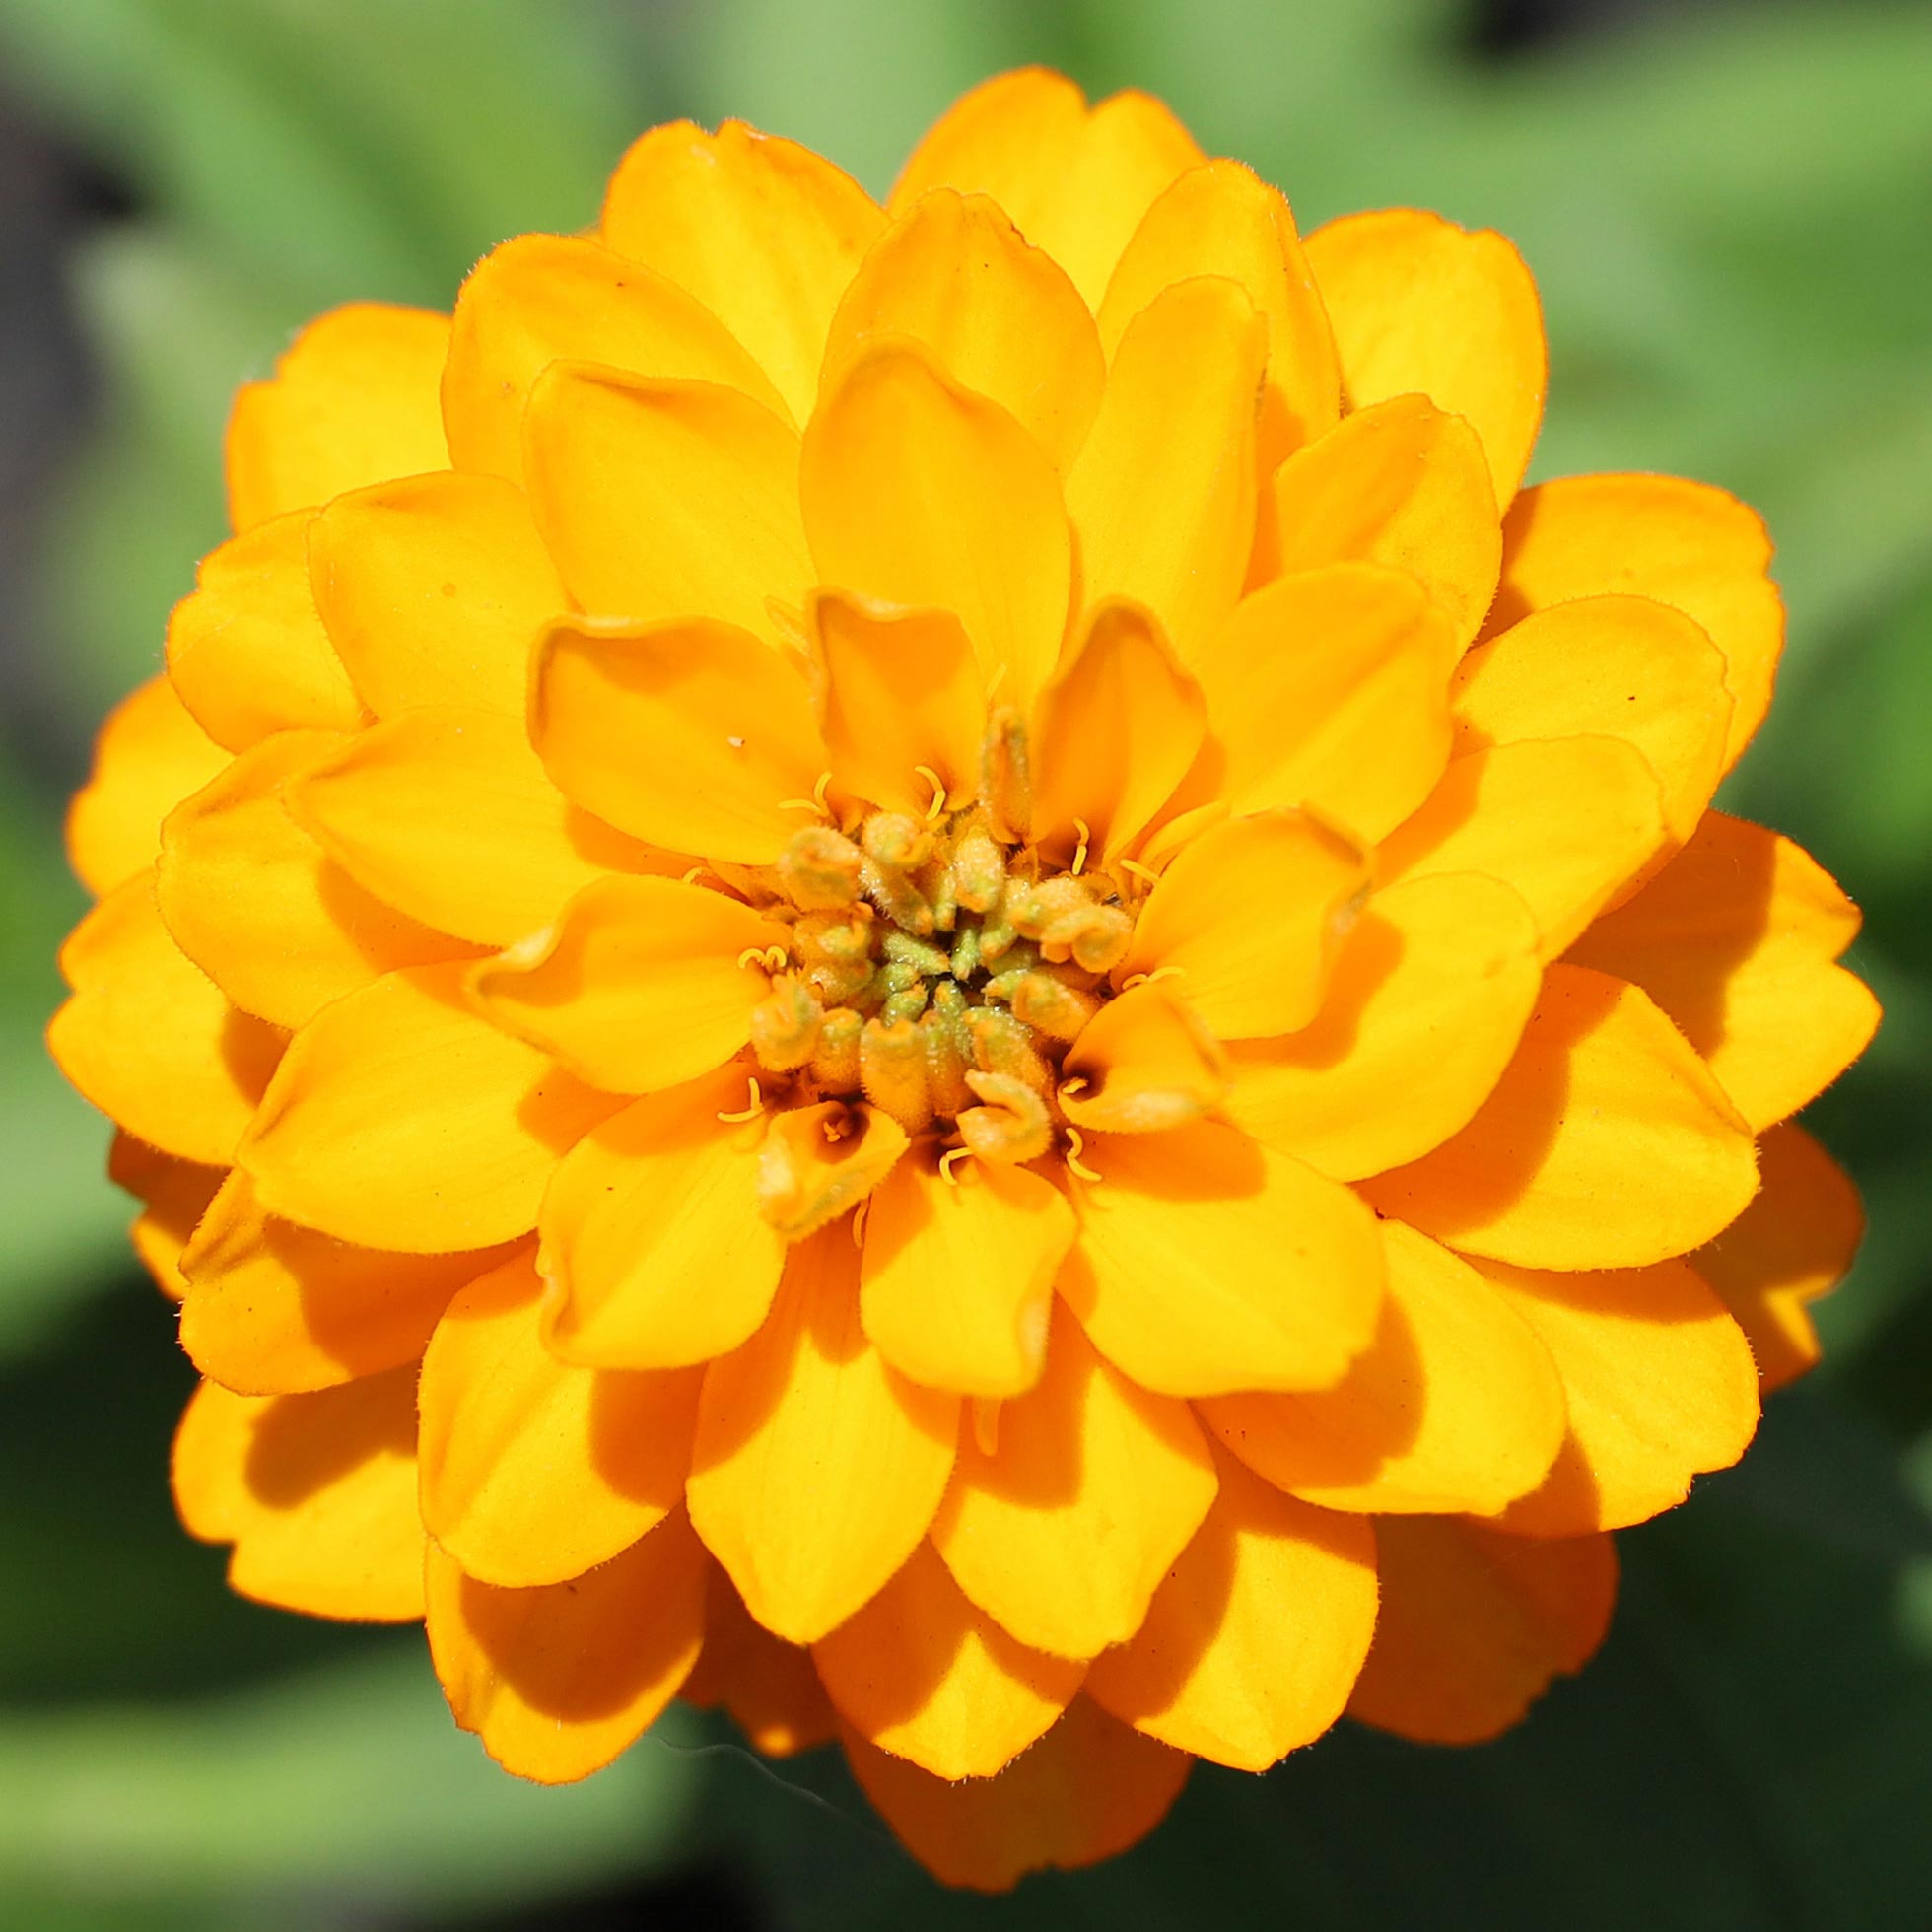 Macro shot of an orange flower